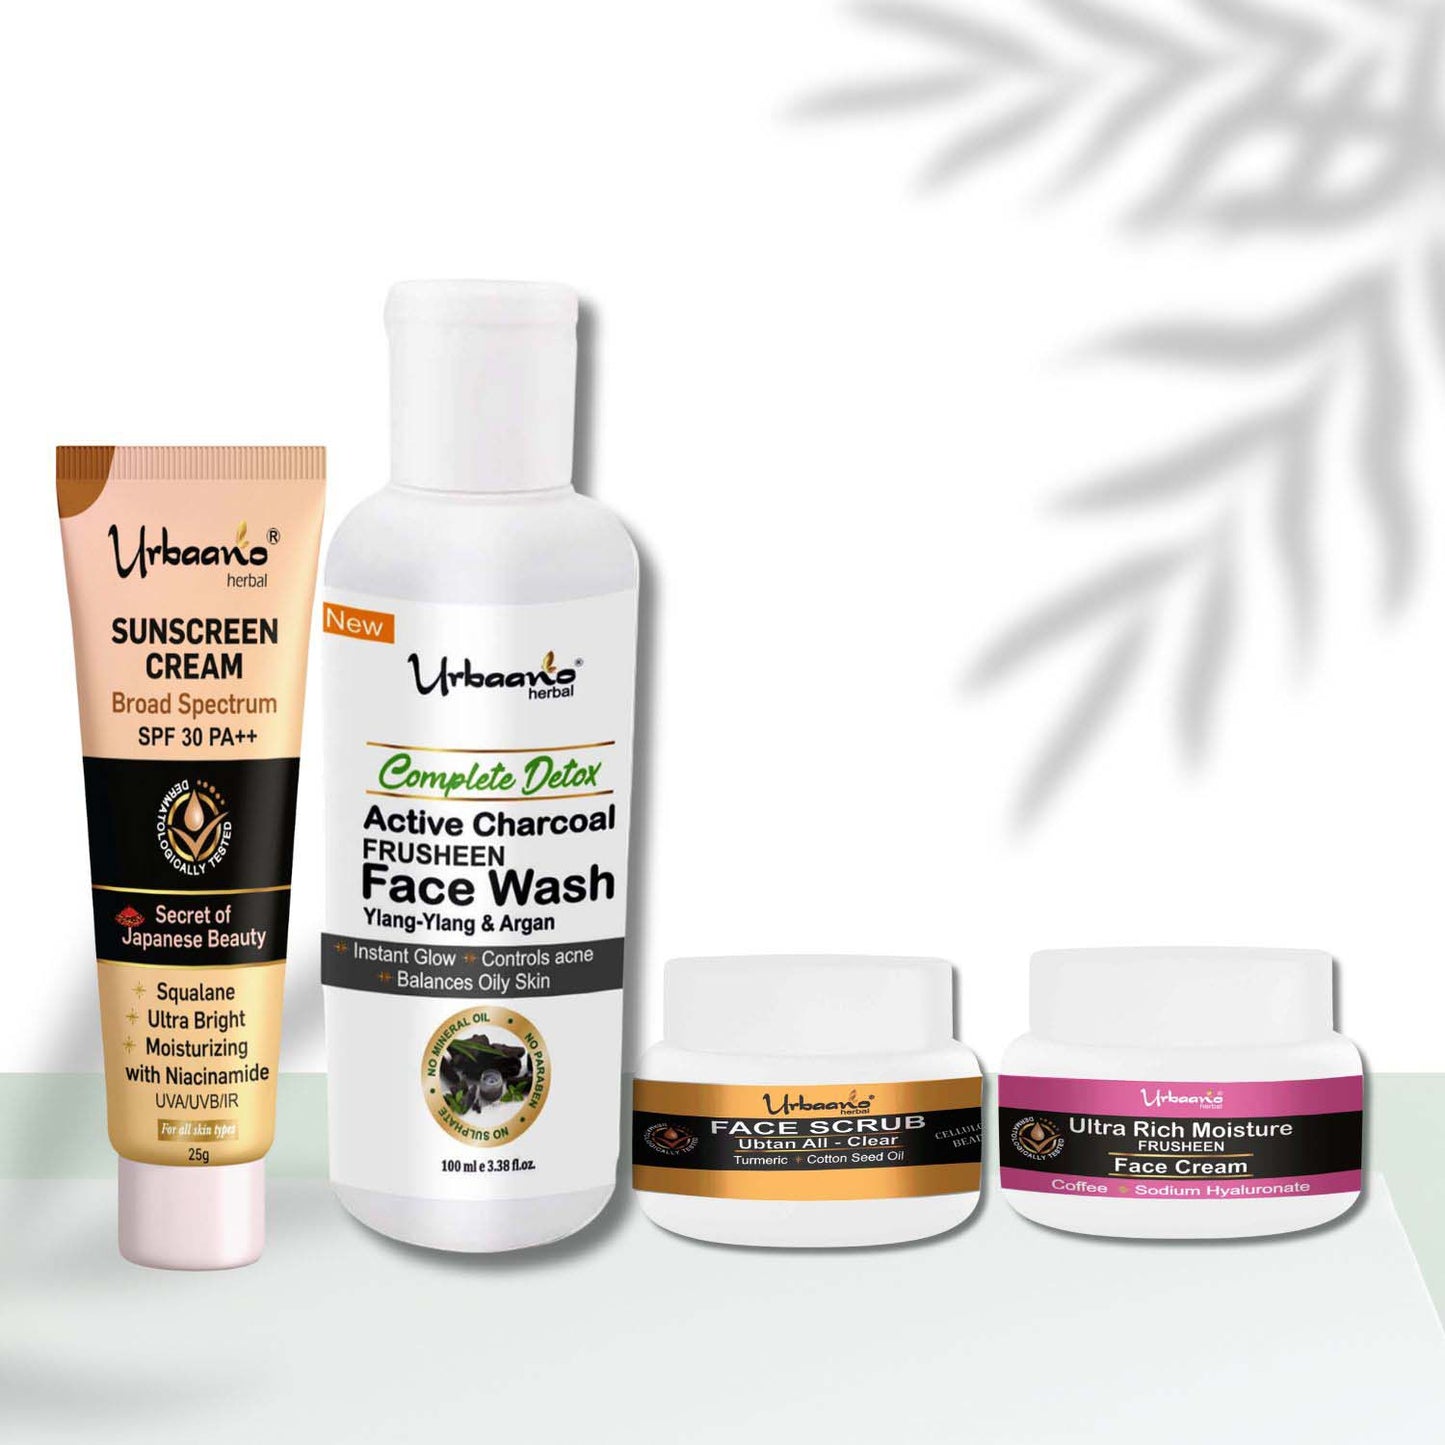 urbaano herbal frusheen ultra rich caffeine moisturizer facial kit-suncream, ubtan scrub, cream, charcoal face wash